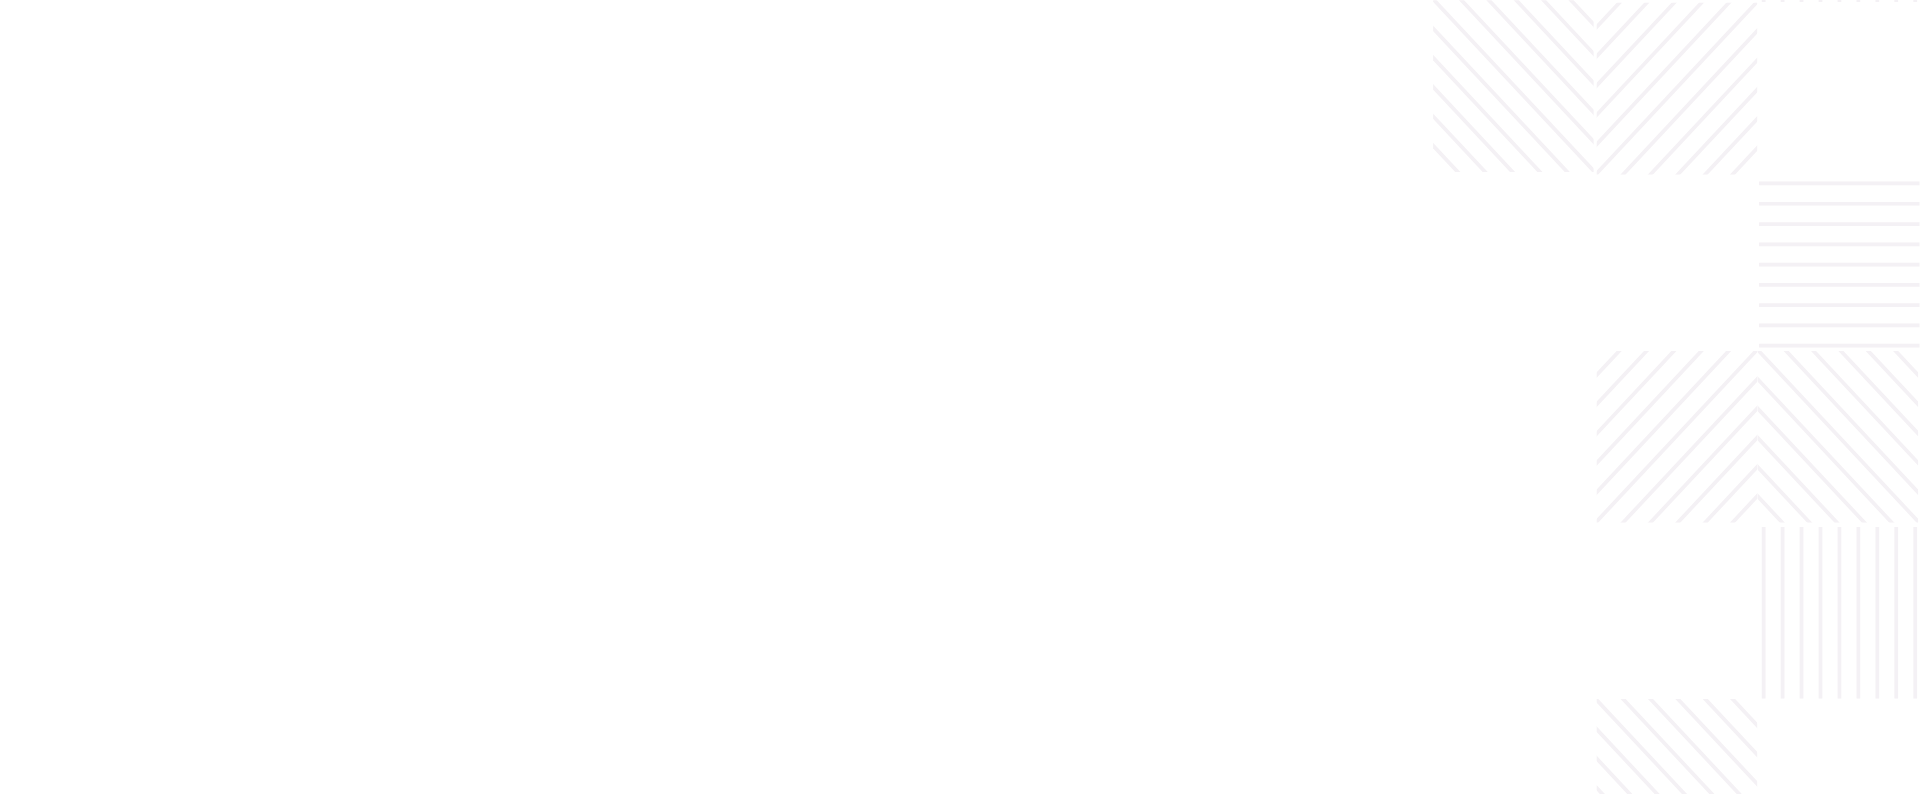 background effect logo